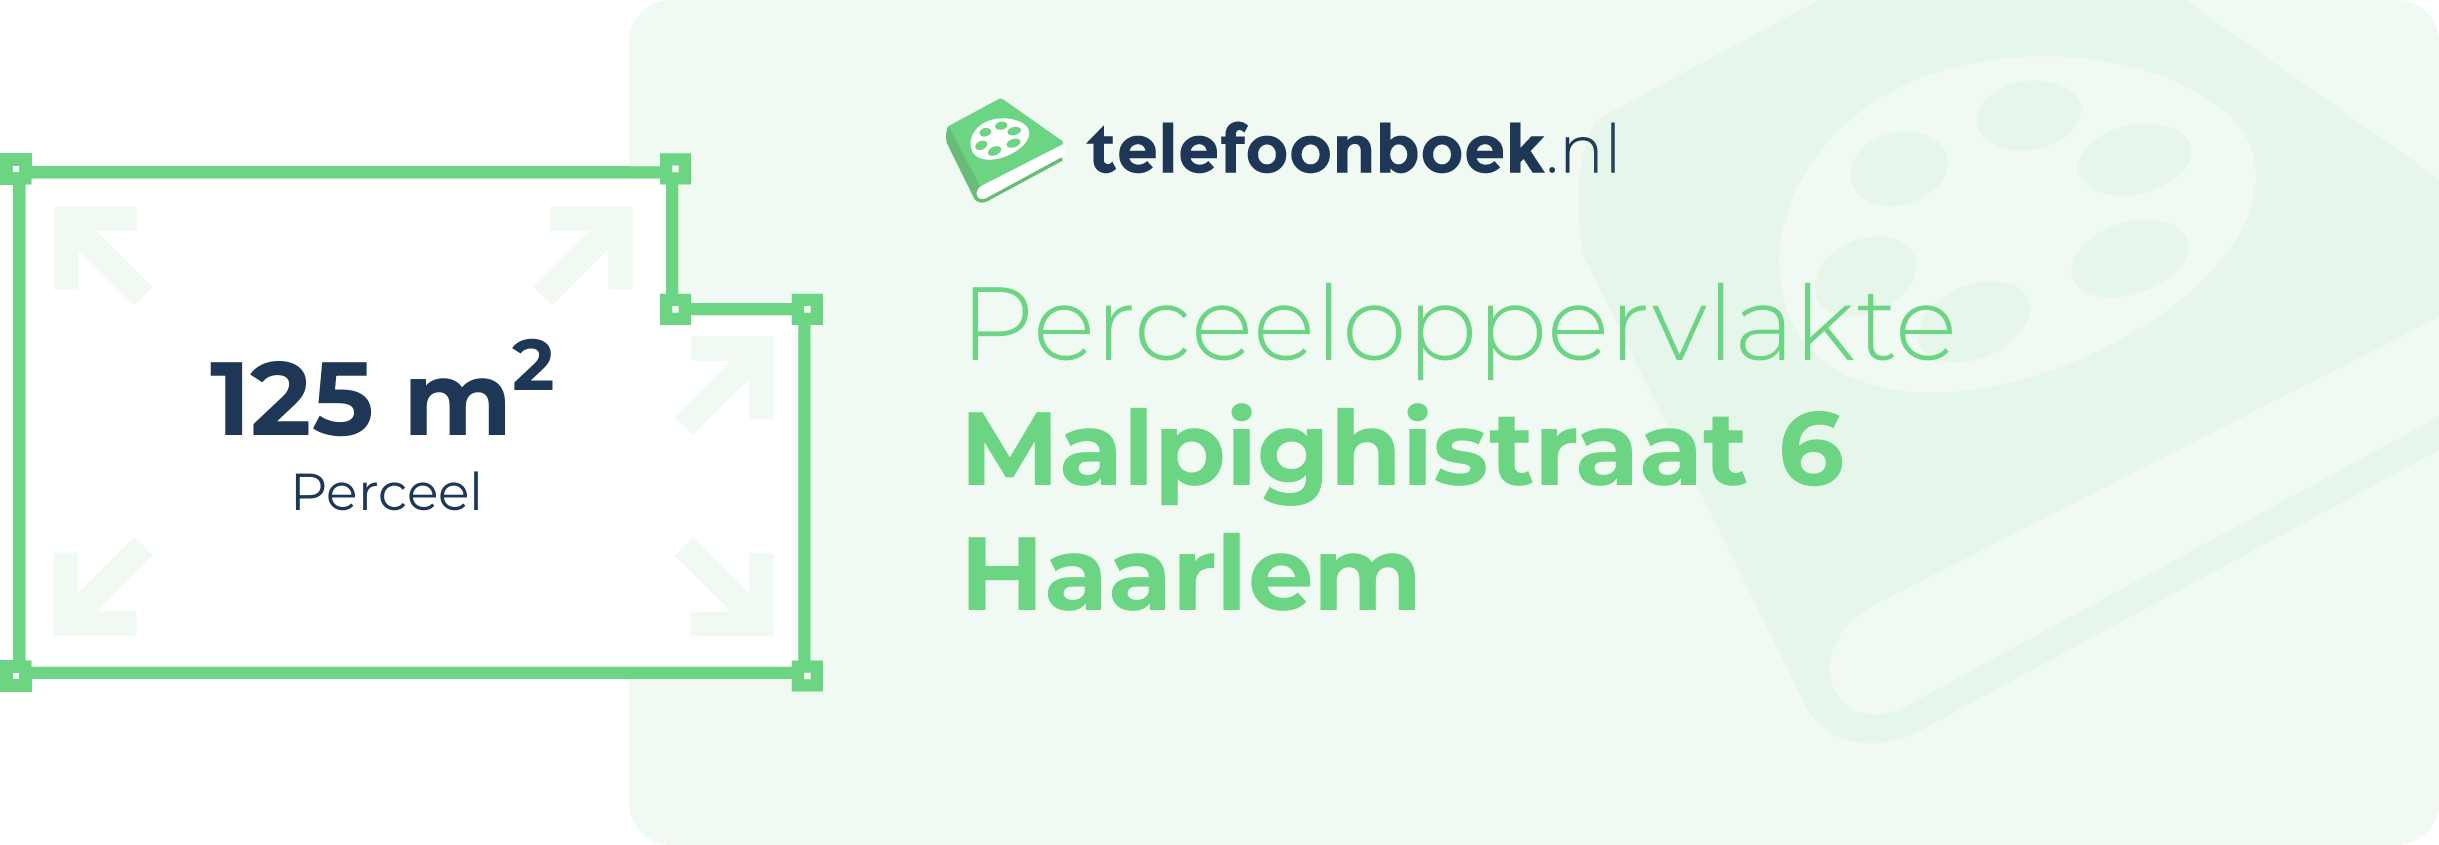 Perceeloppervlakte Malpighistraat 6 Haarlem